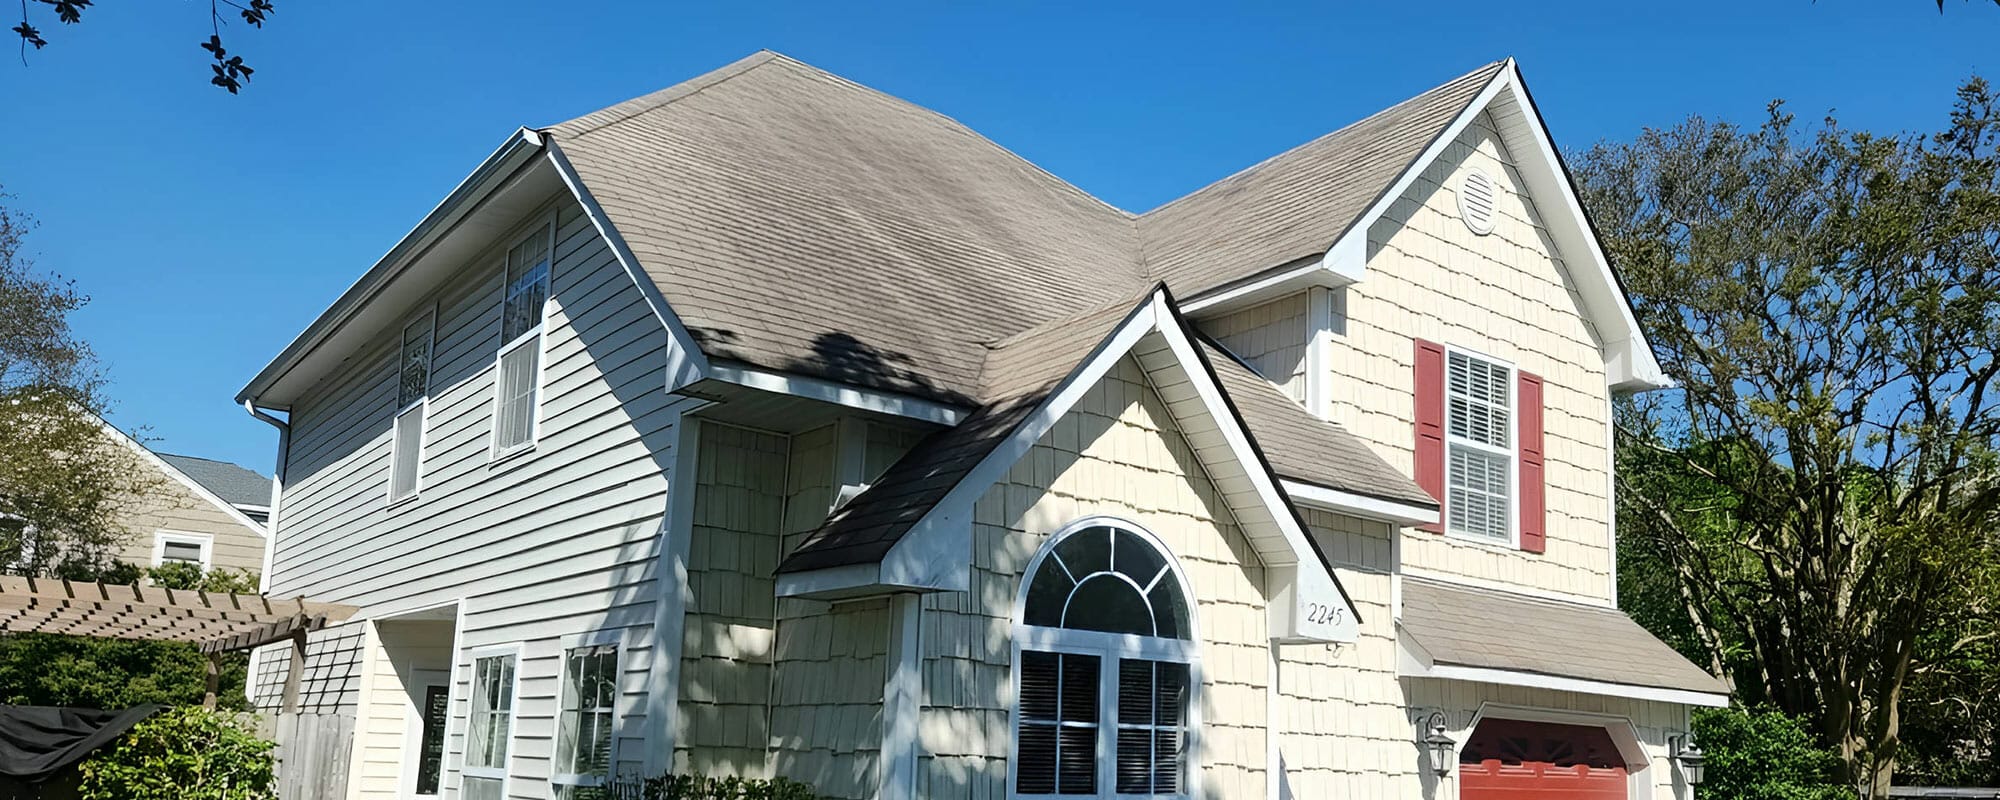 trusted roofing company Virginia Beach, VA